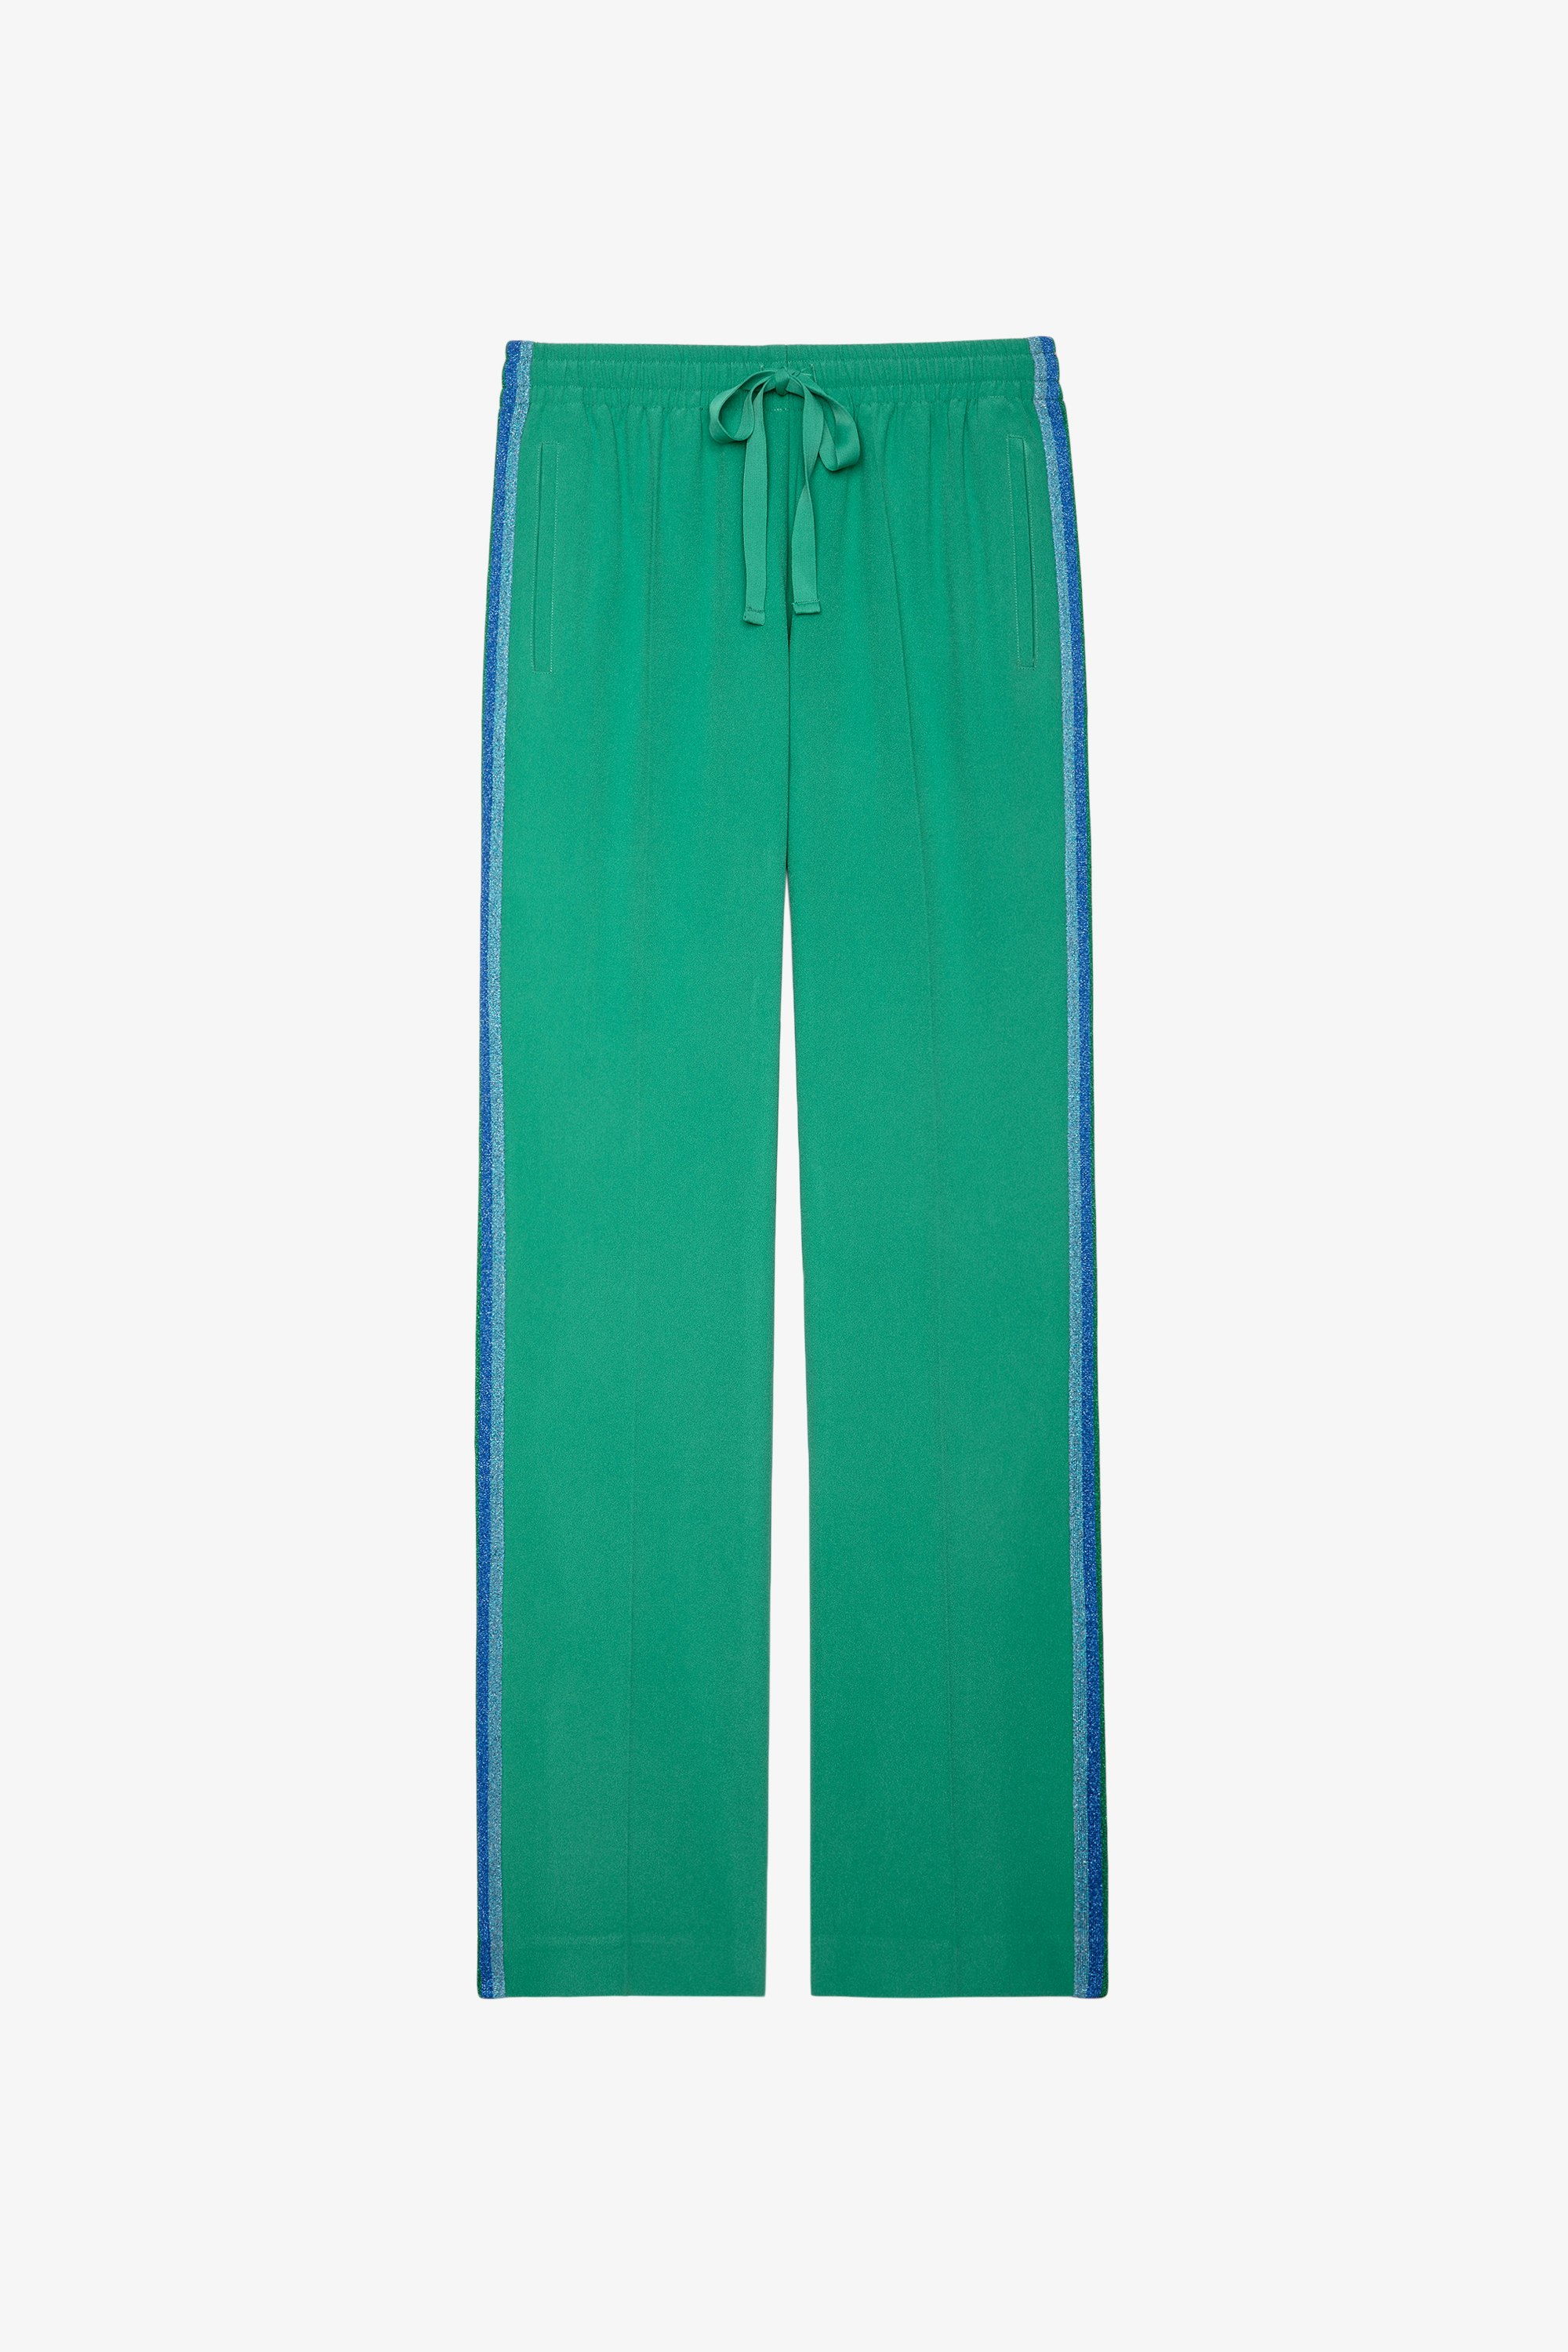 Pantaloni Pomy crepe Pantaloni fluidi verdi con bande laterali glitterate donna